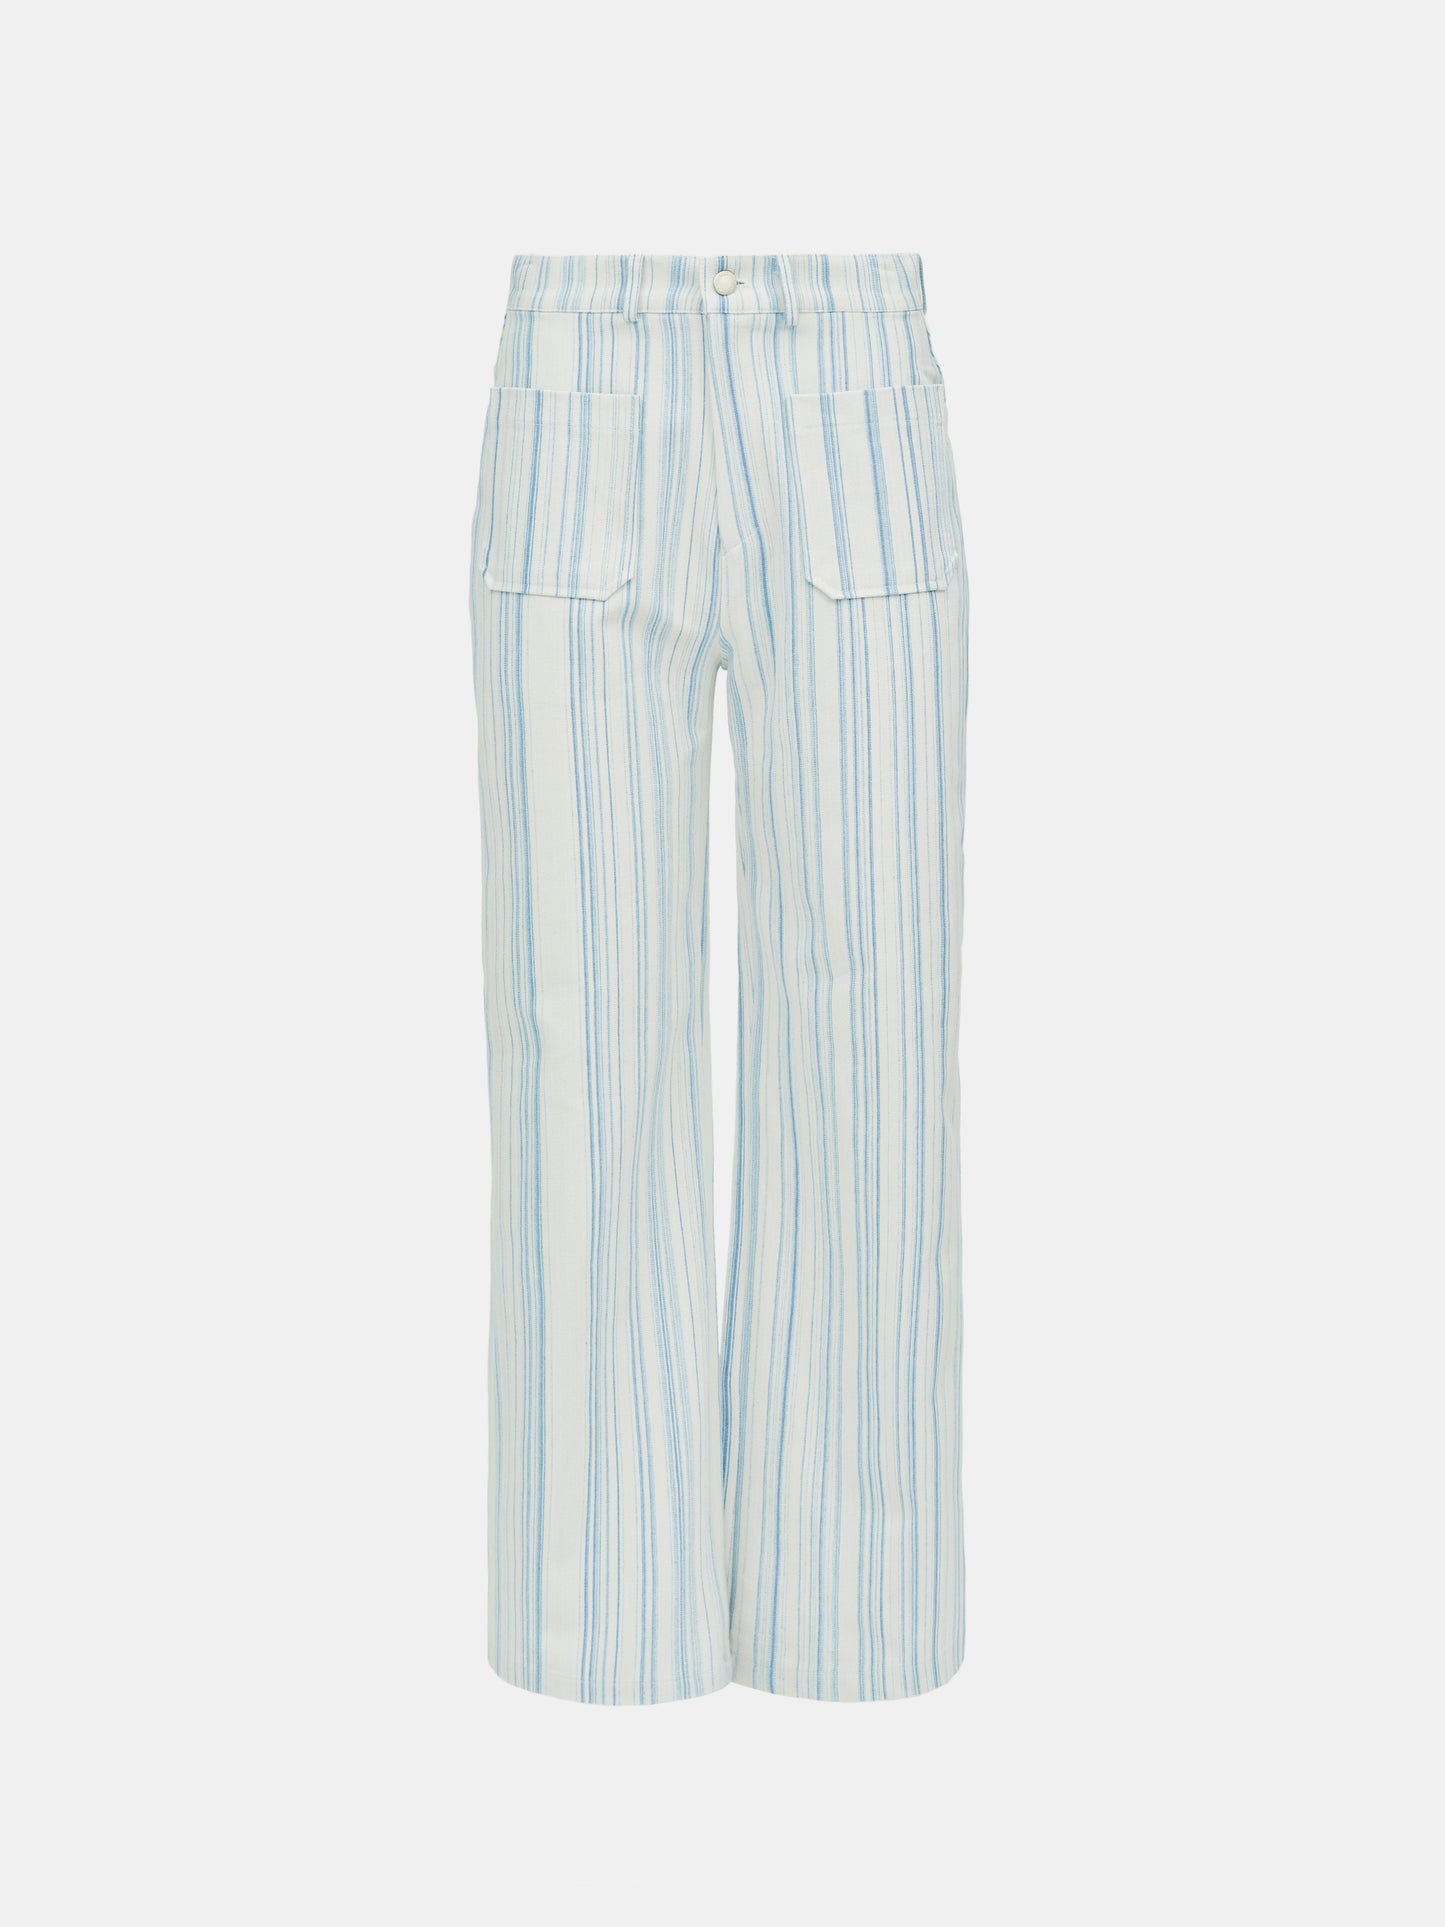 Deauville Stripe Jeans, Light Blue